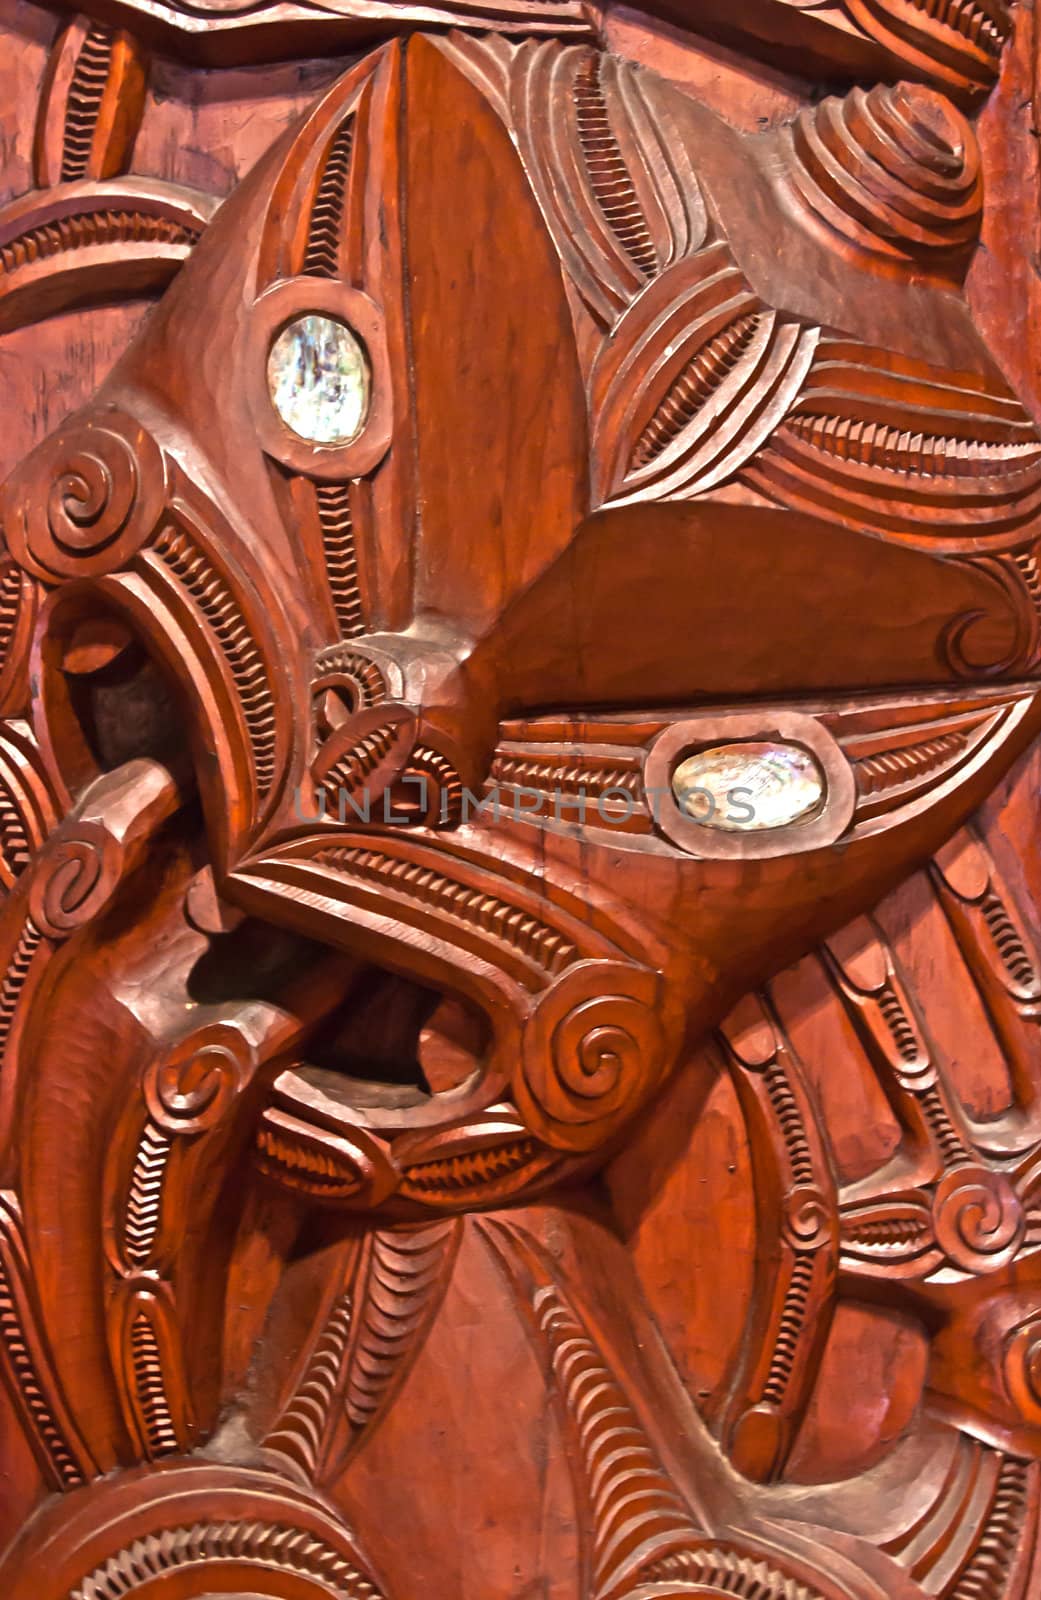 Maori Carving by urmoments